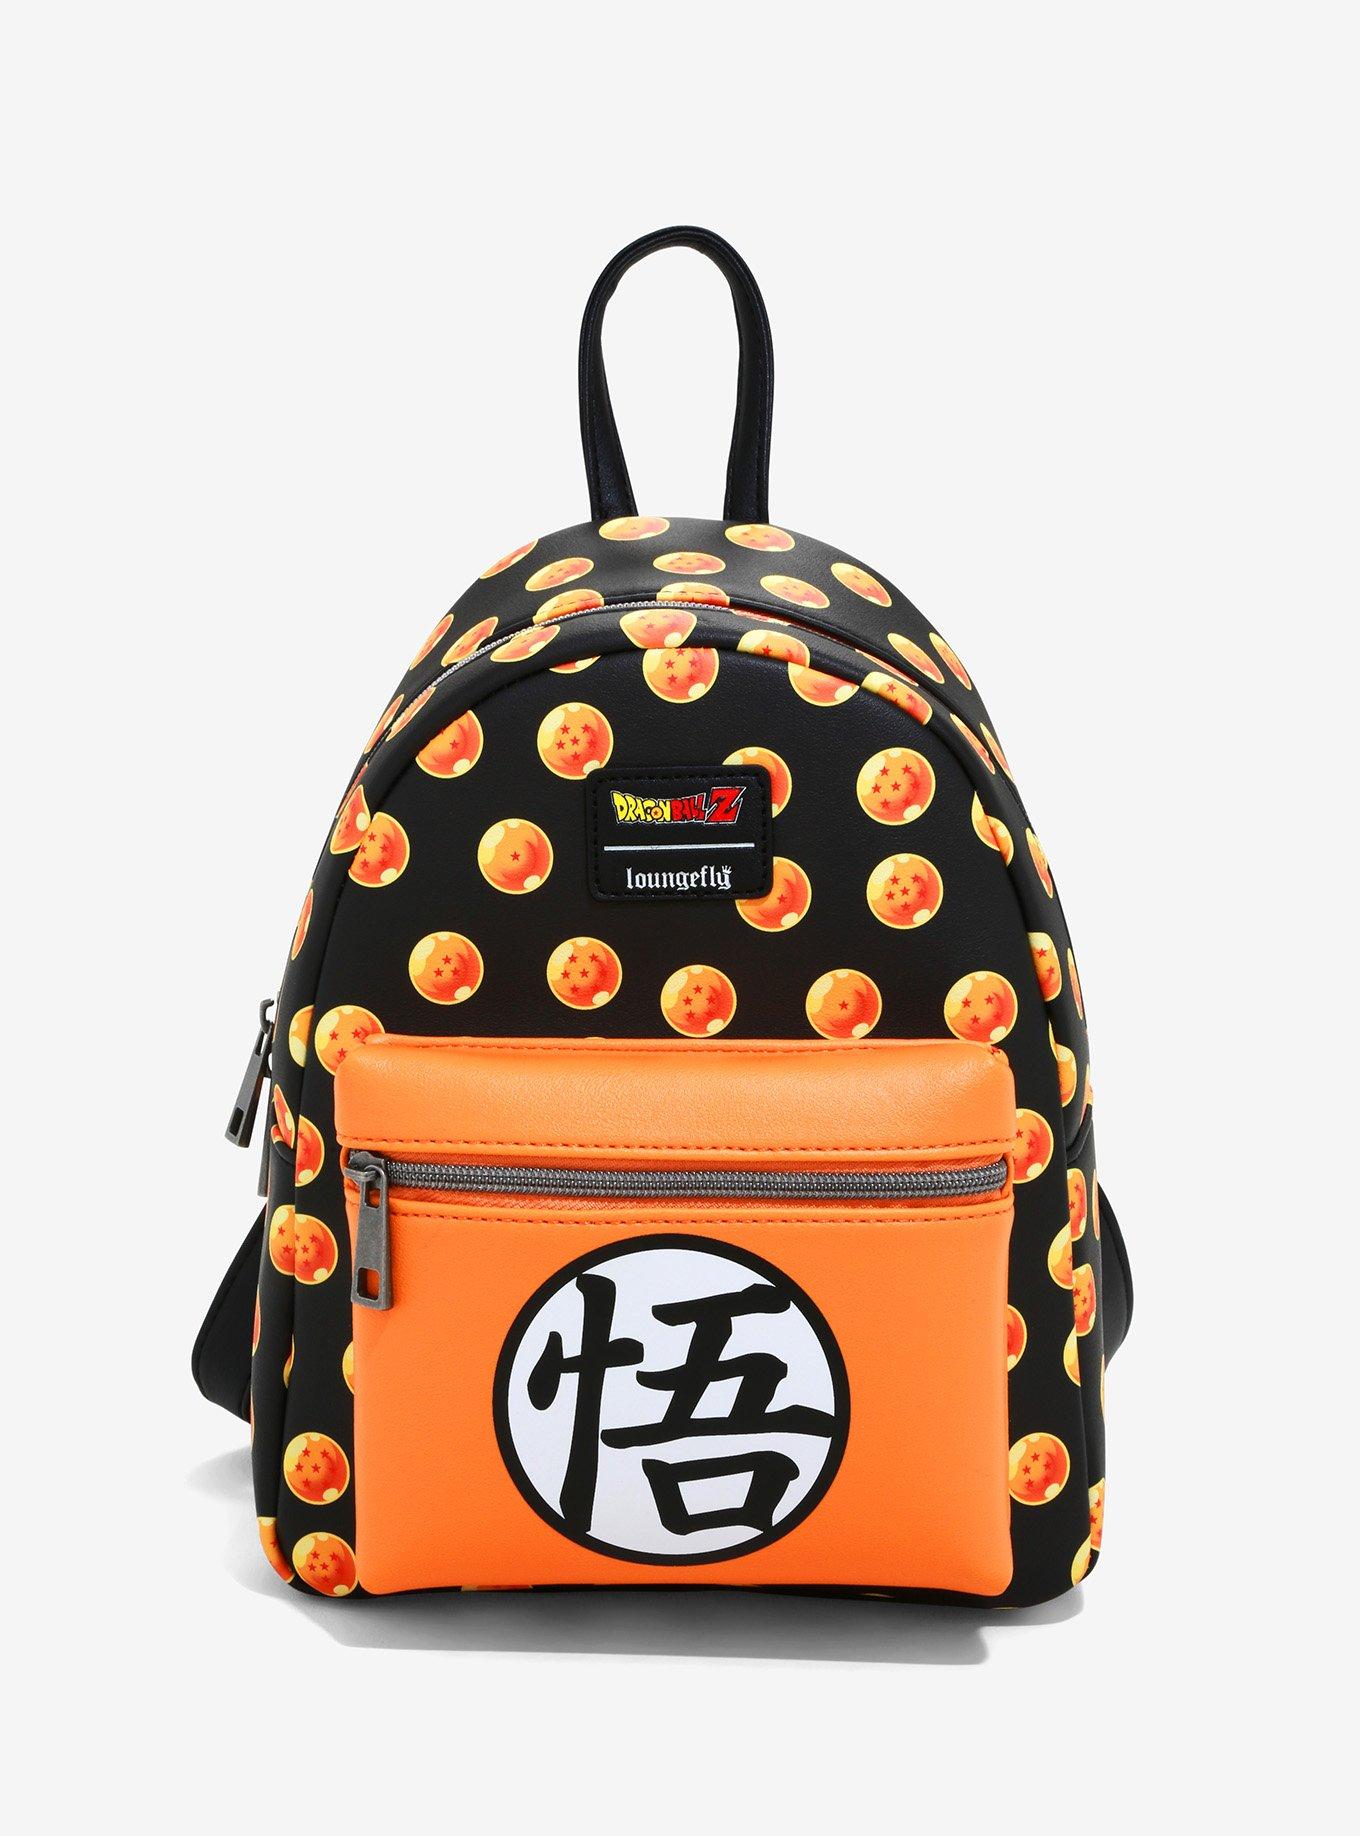 Dragon Ball Z Goku Plush Mini Backpack